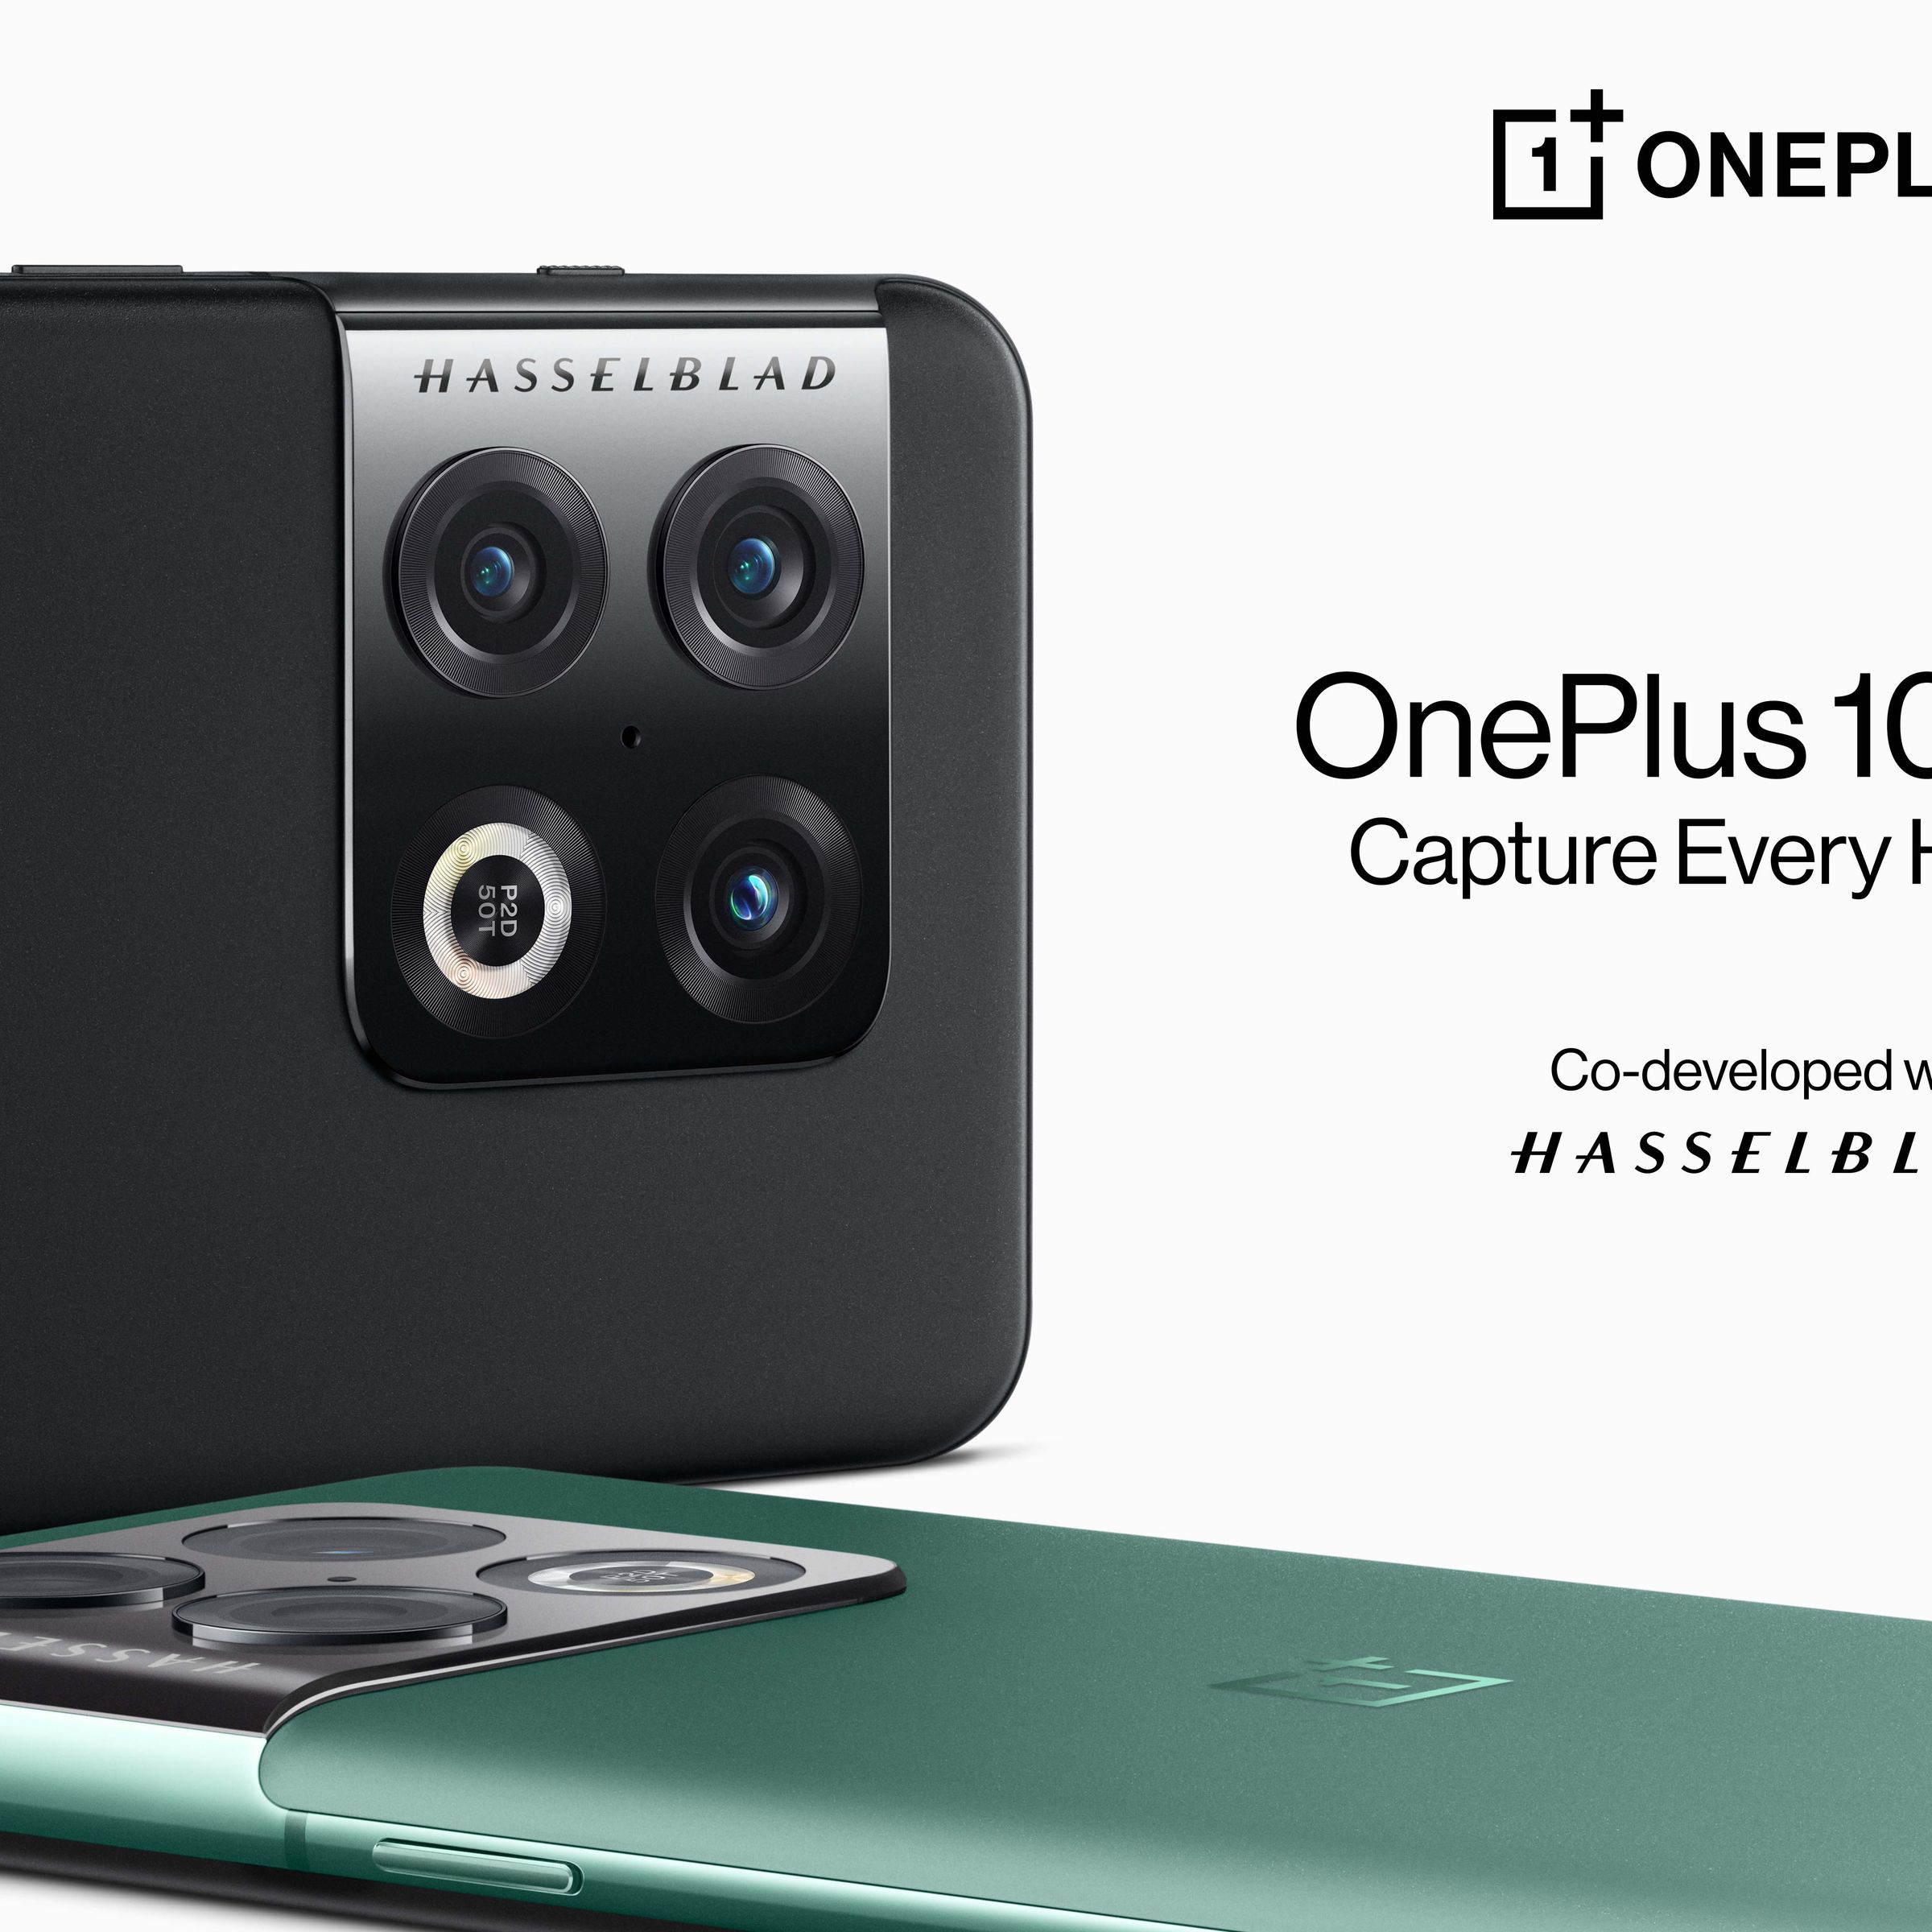 The OnePlus 10 Pro